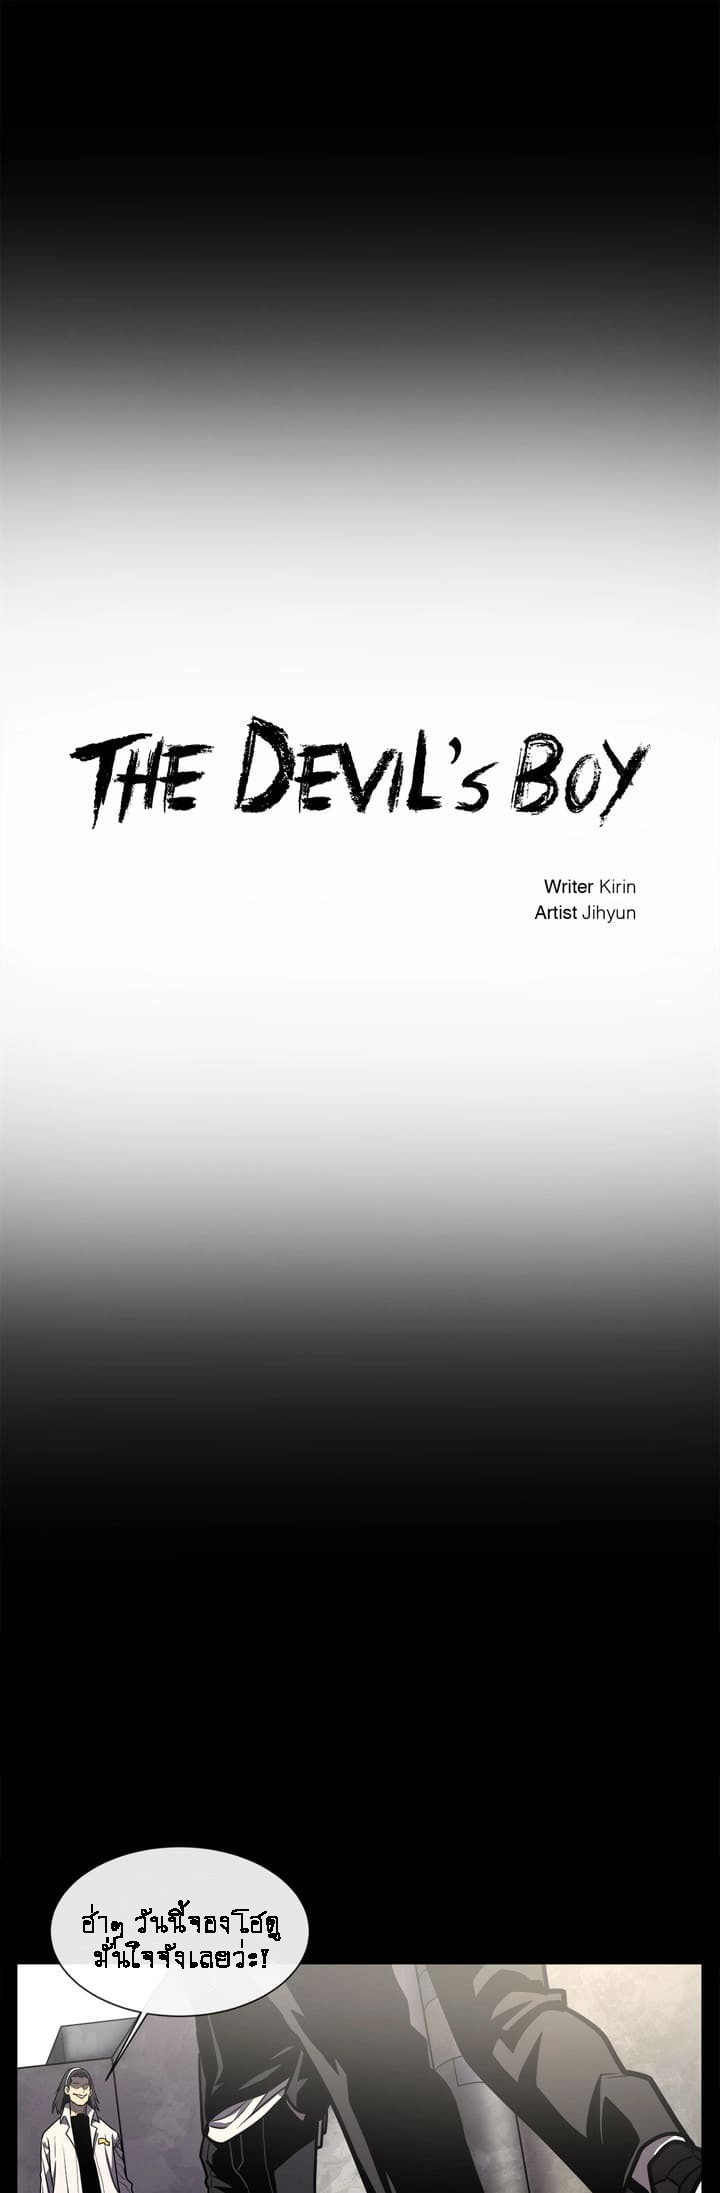 The-Devils-Boy-3-4.jpg